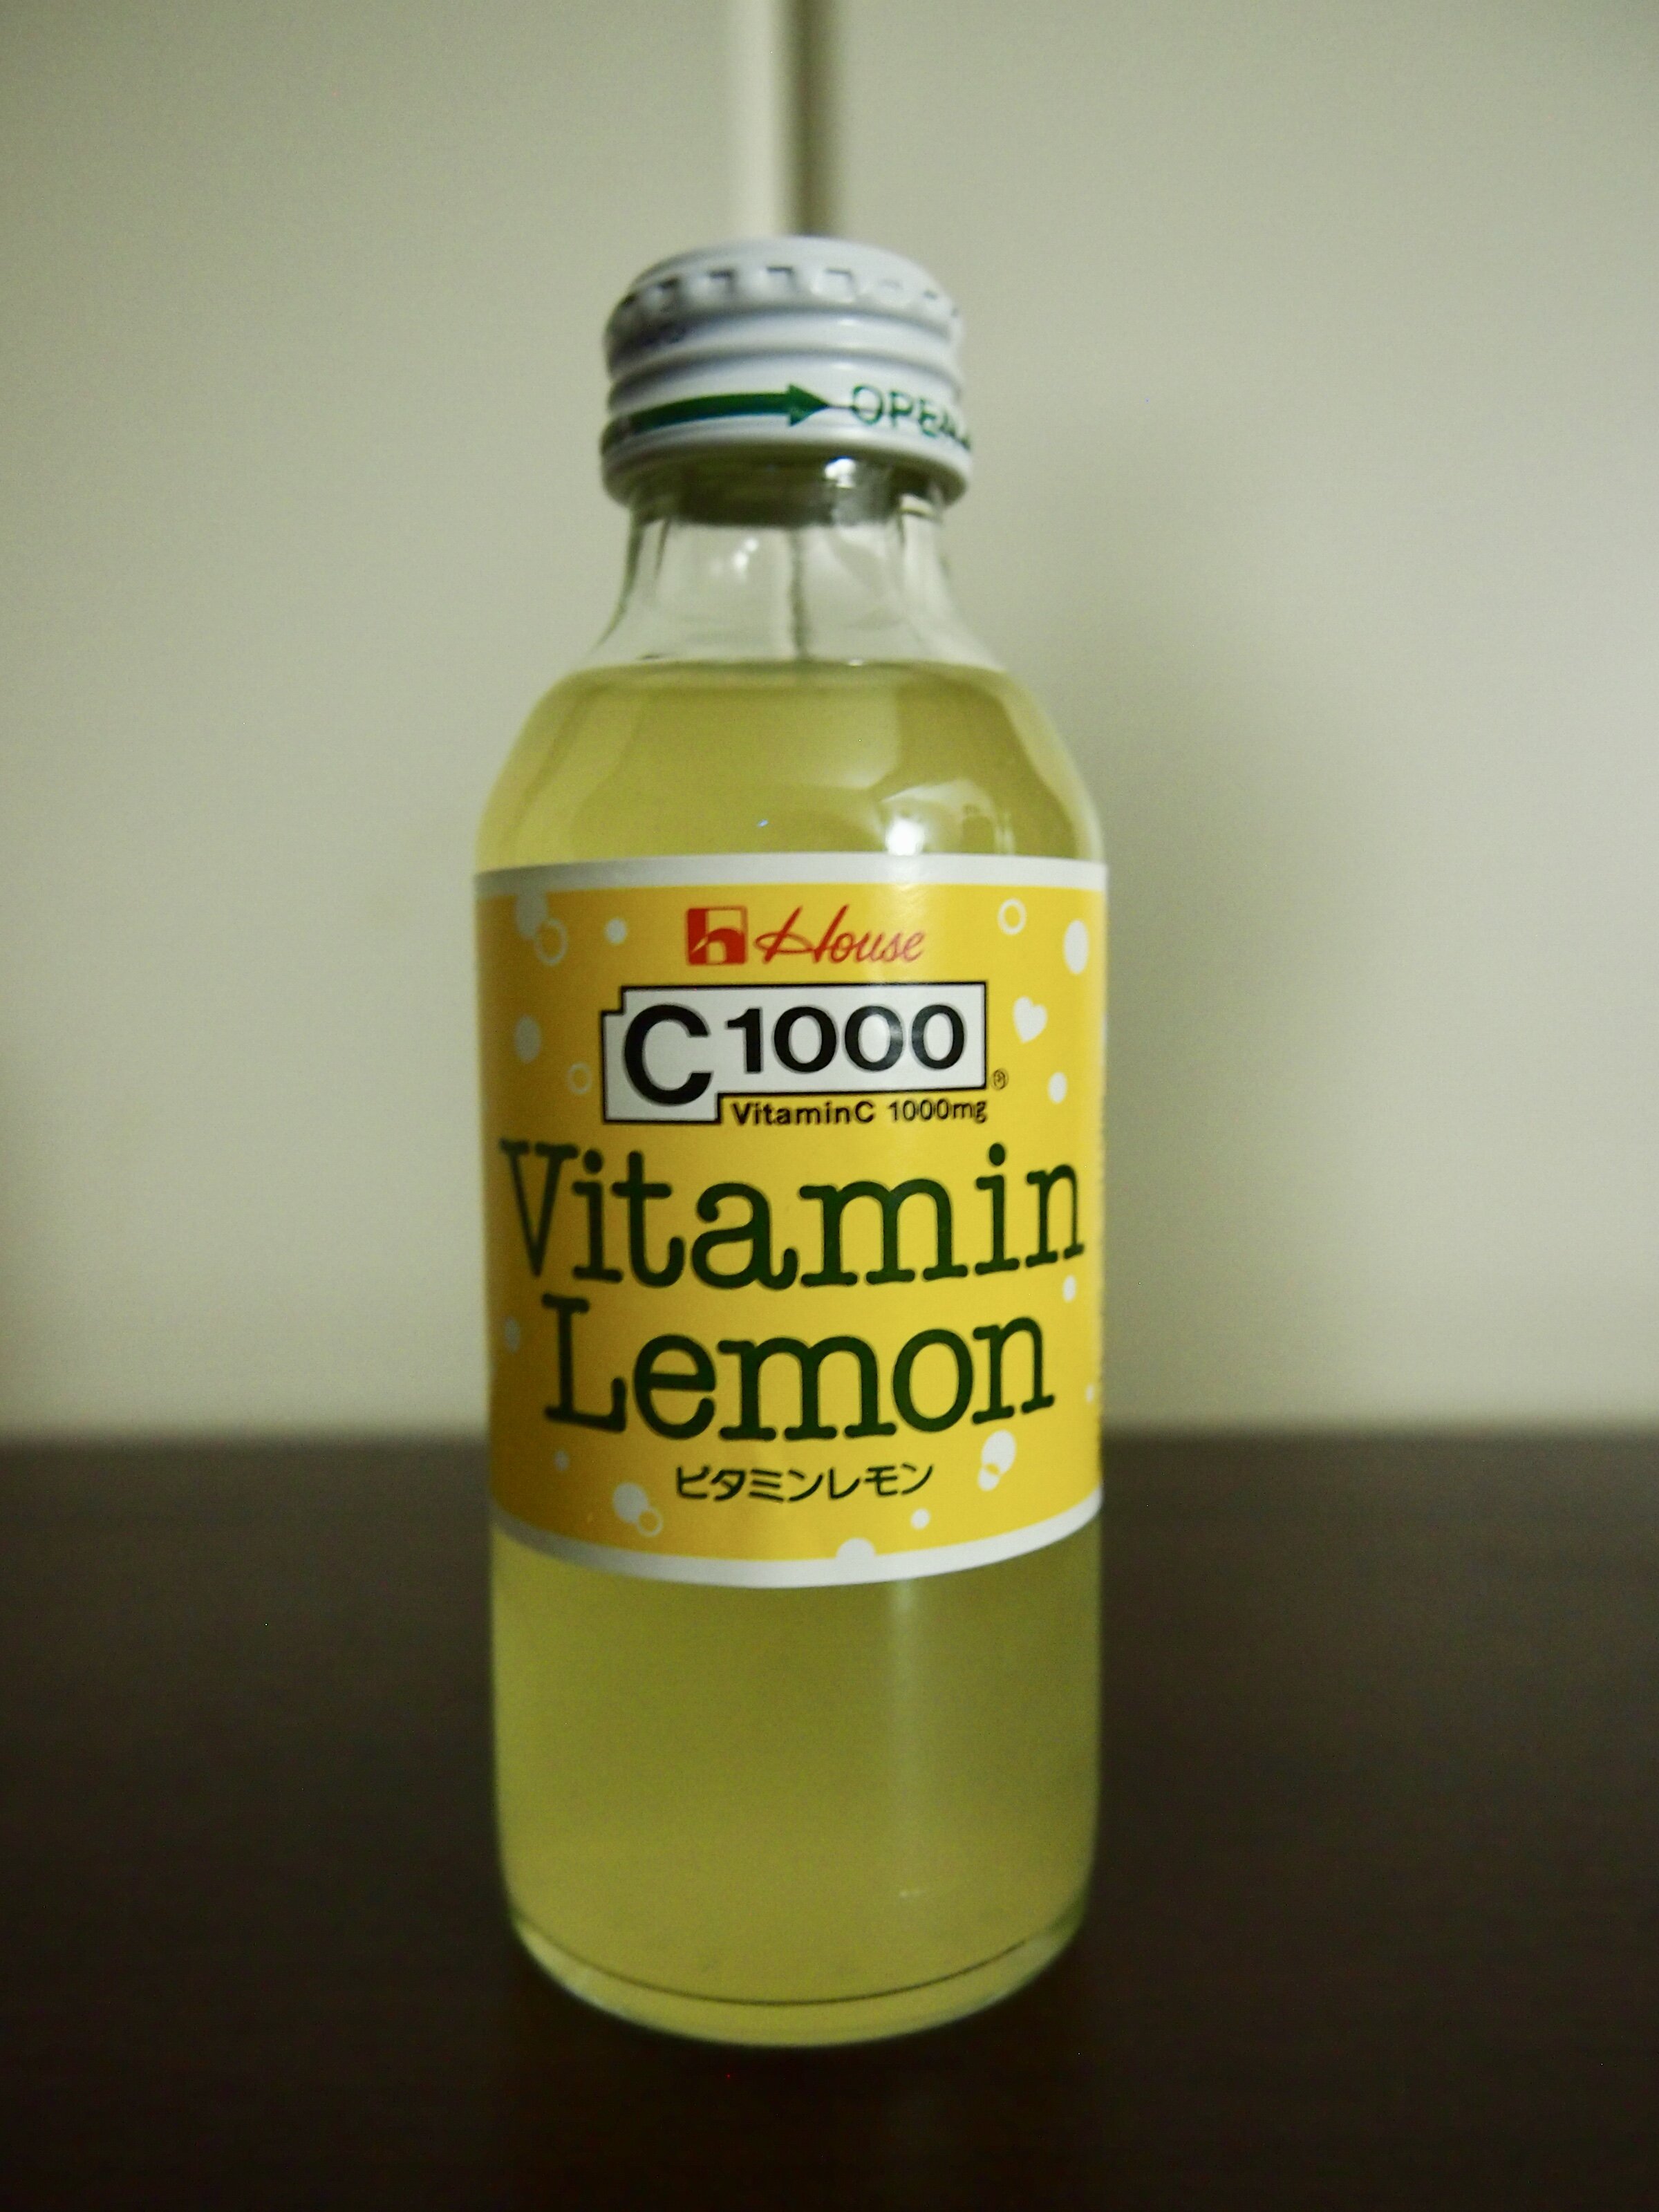 Konbini Kinyoubi: C.C. Lemon — As Seen In Japan